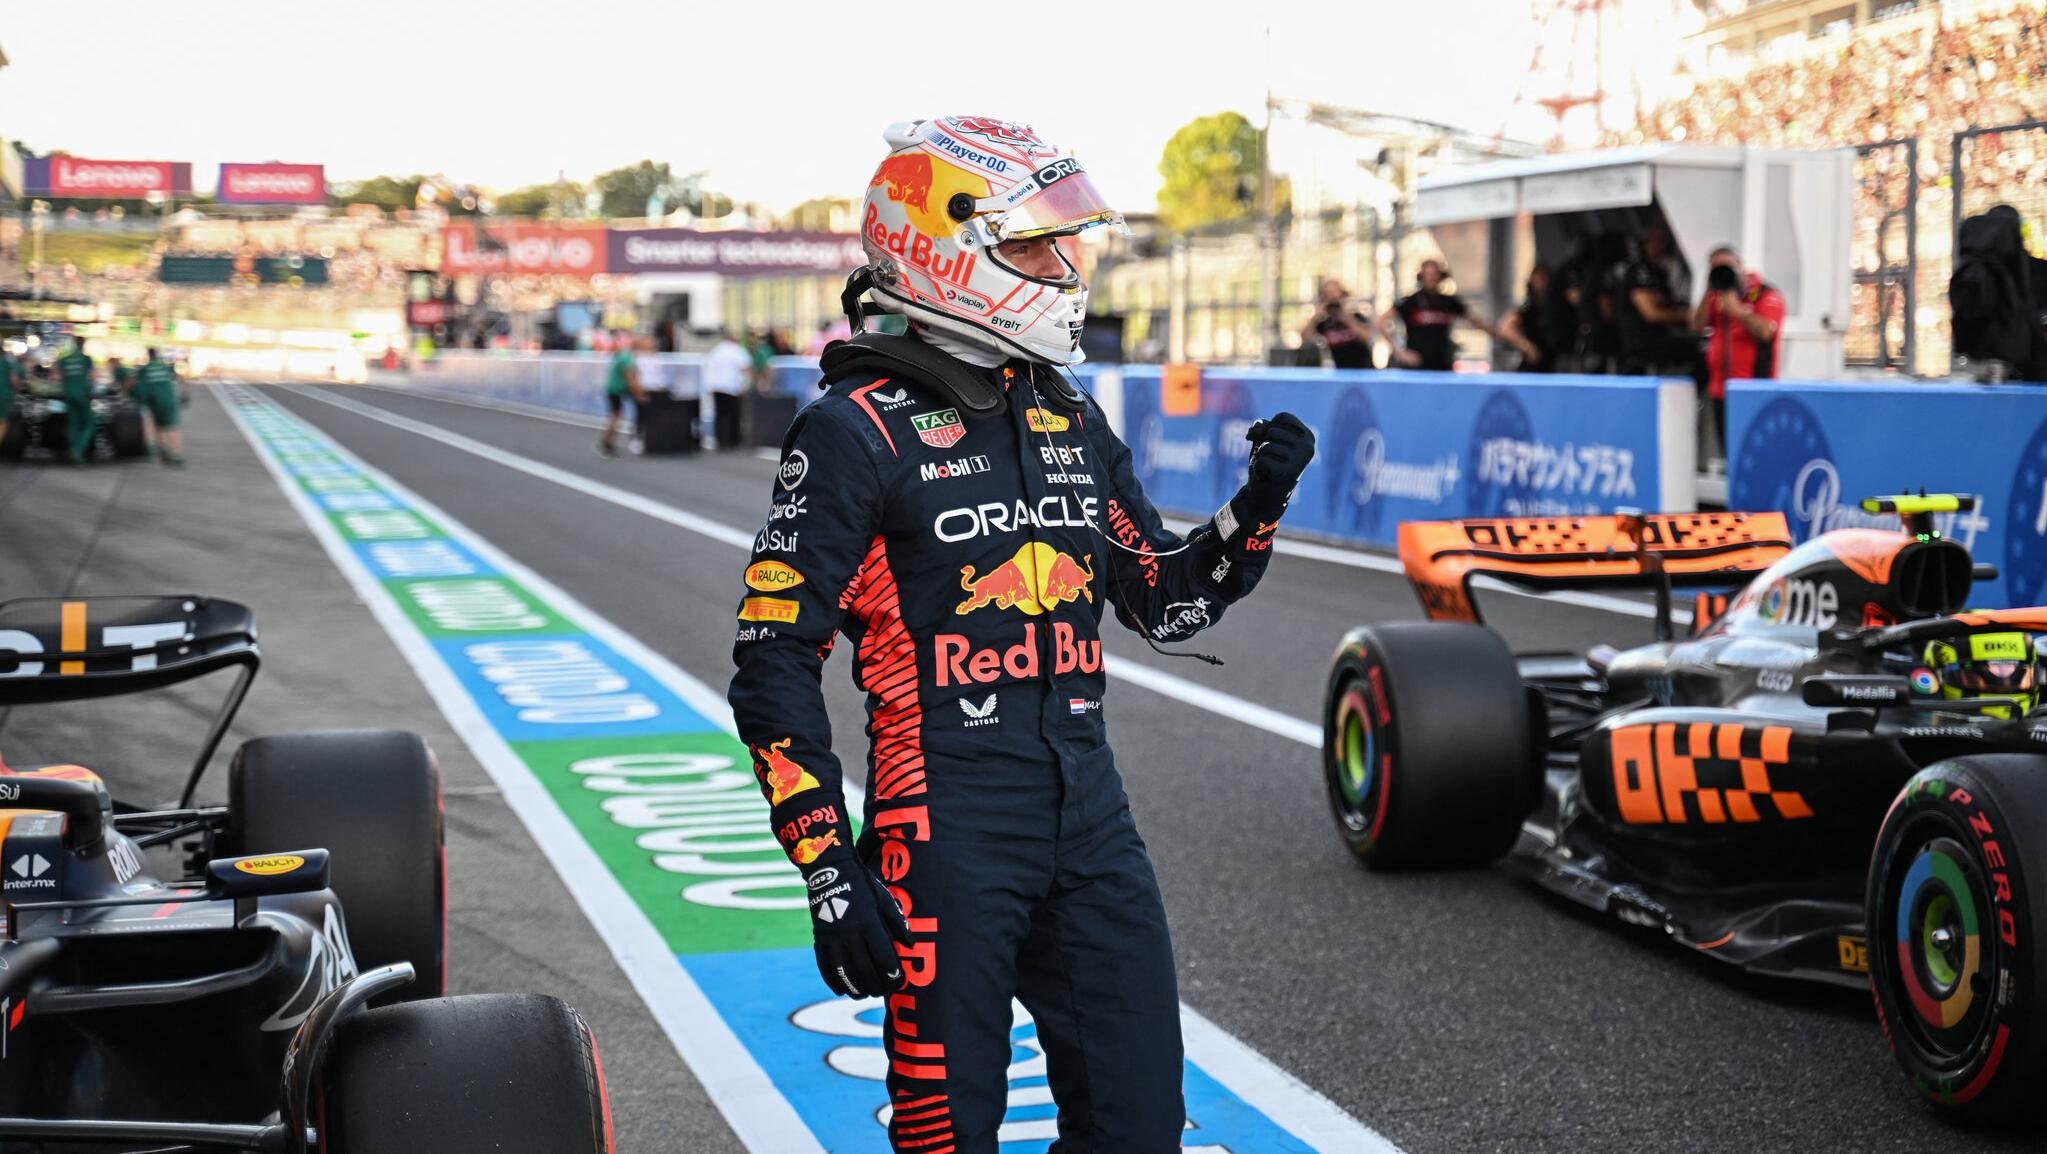 GP do Japão: Verstappen lidera treino 1 em Suzuka, fórmula 1